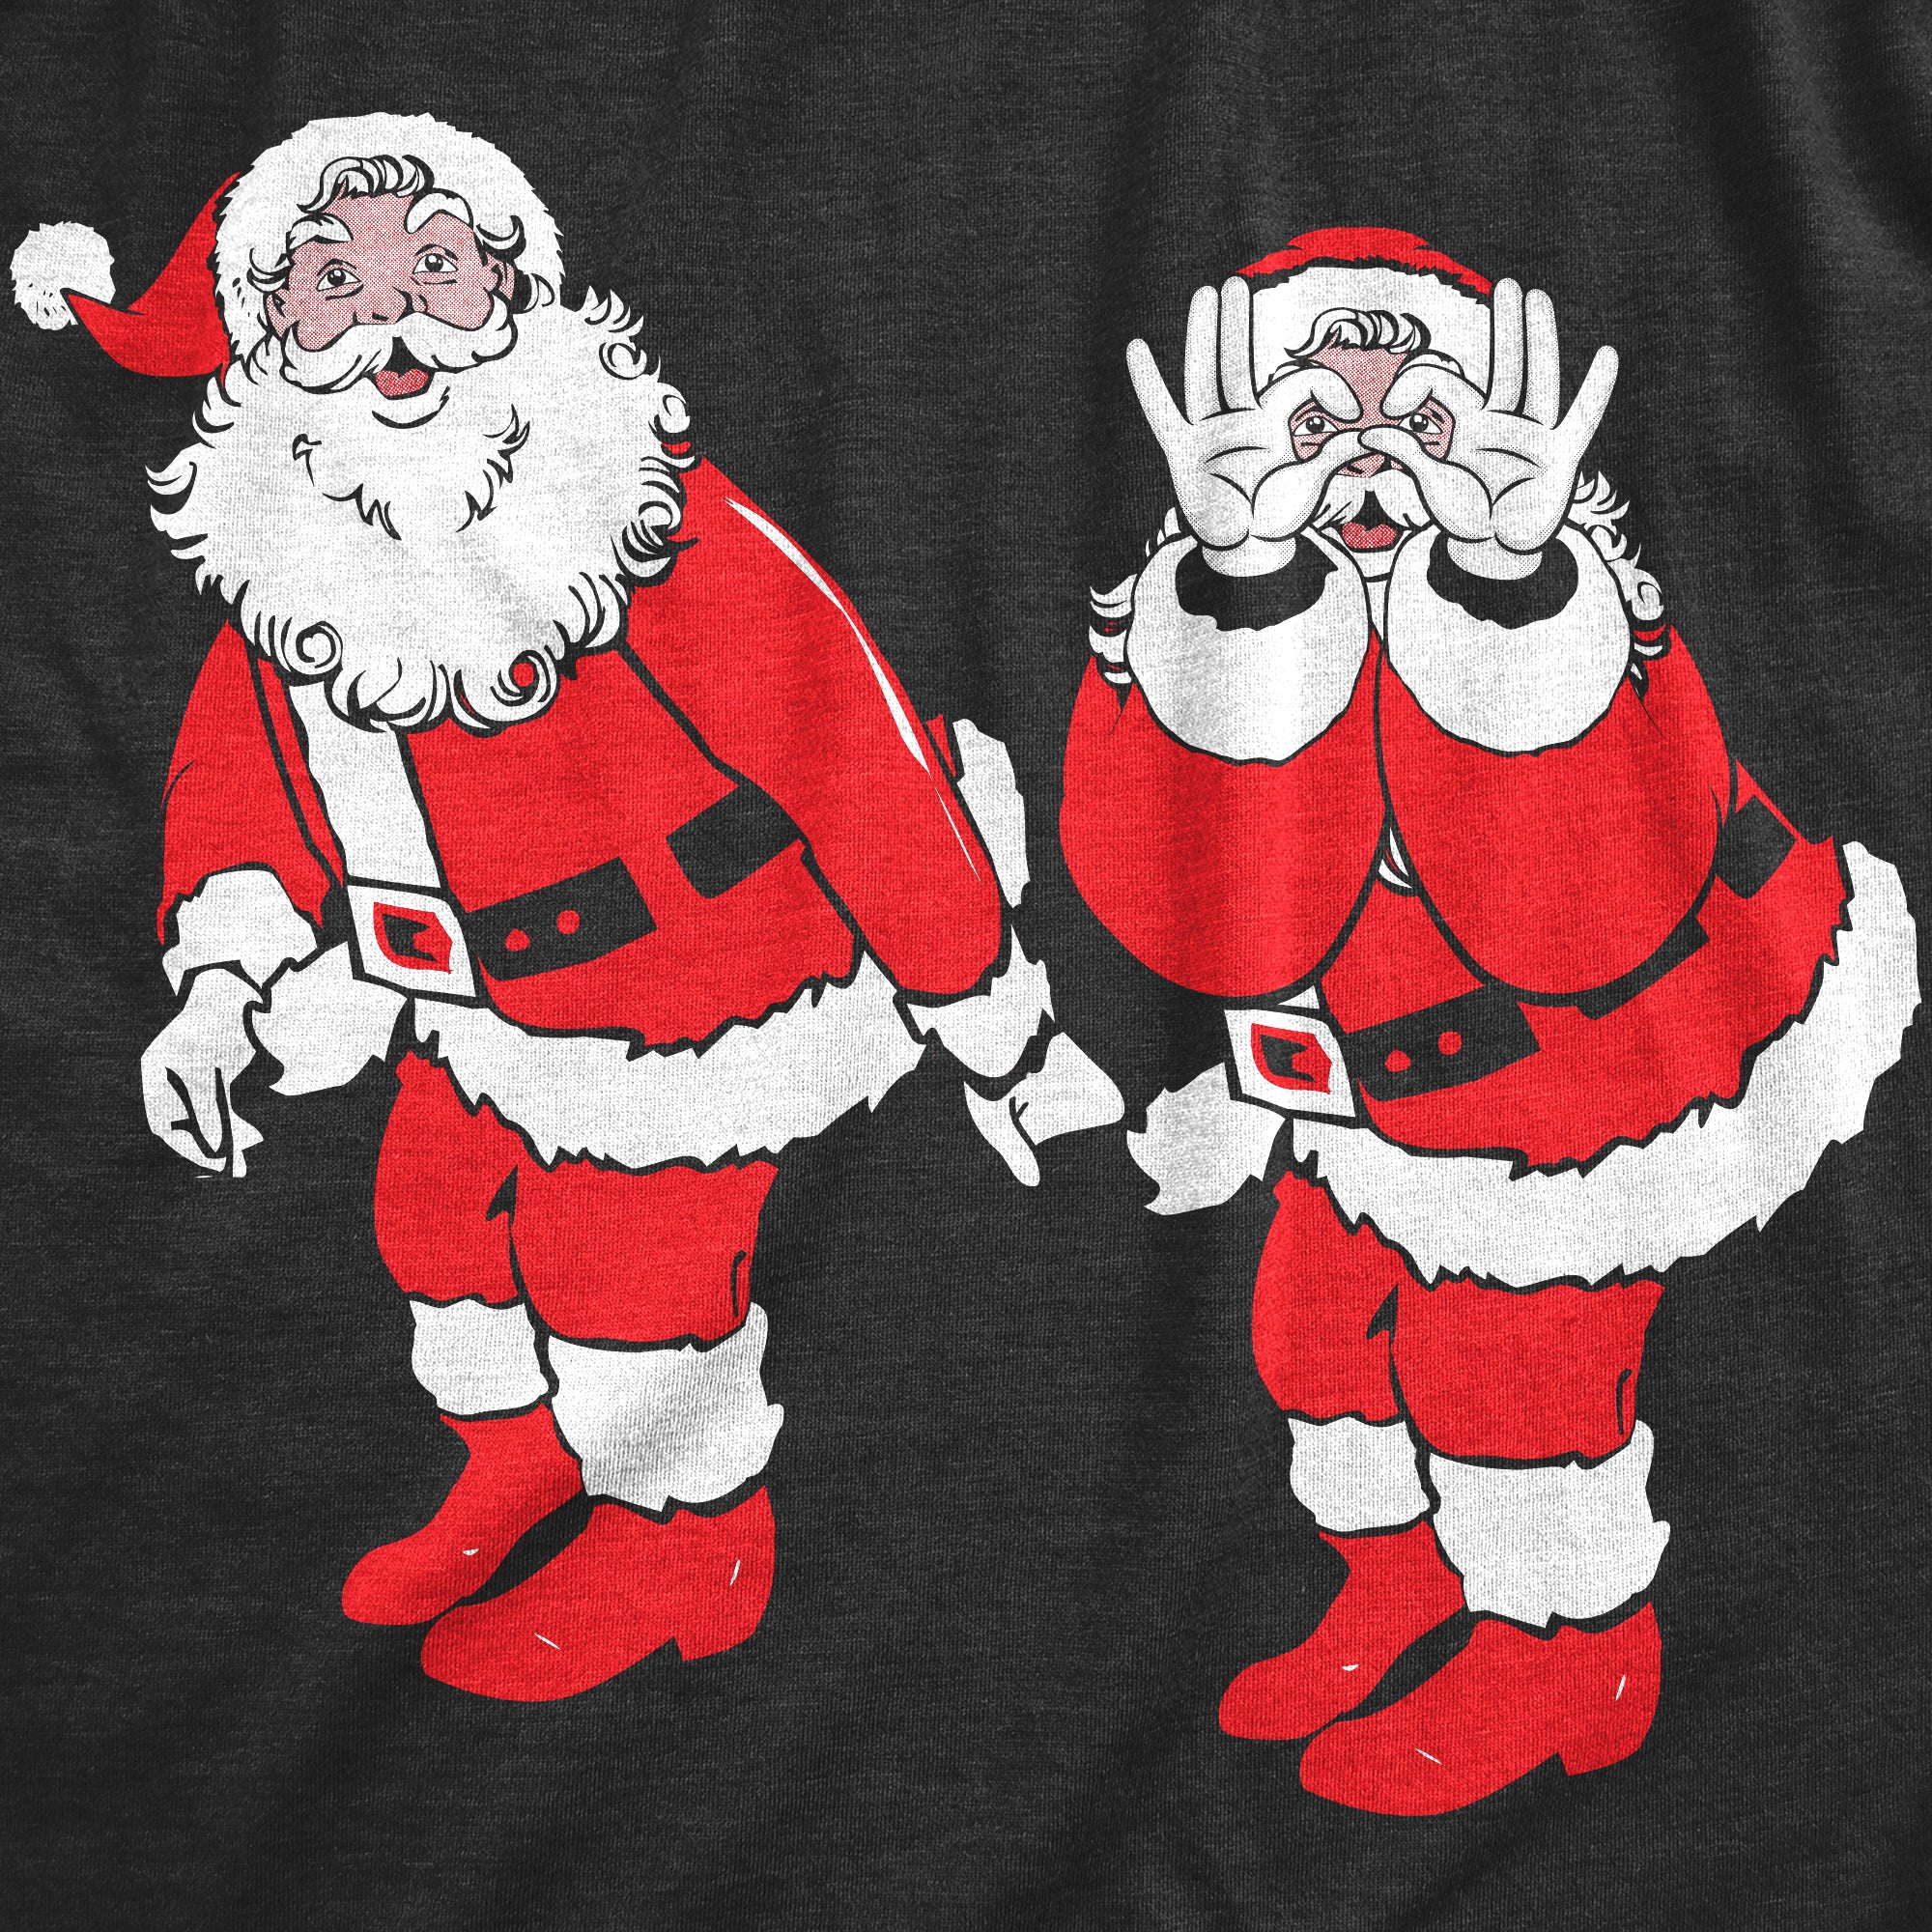 Funny Heather Black - Griddy Griddy Dance Santa Womens T Shirt Nerdy Christmas Internet sarcastic Tee